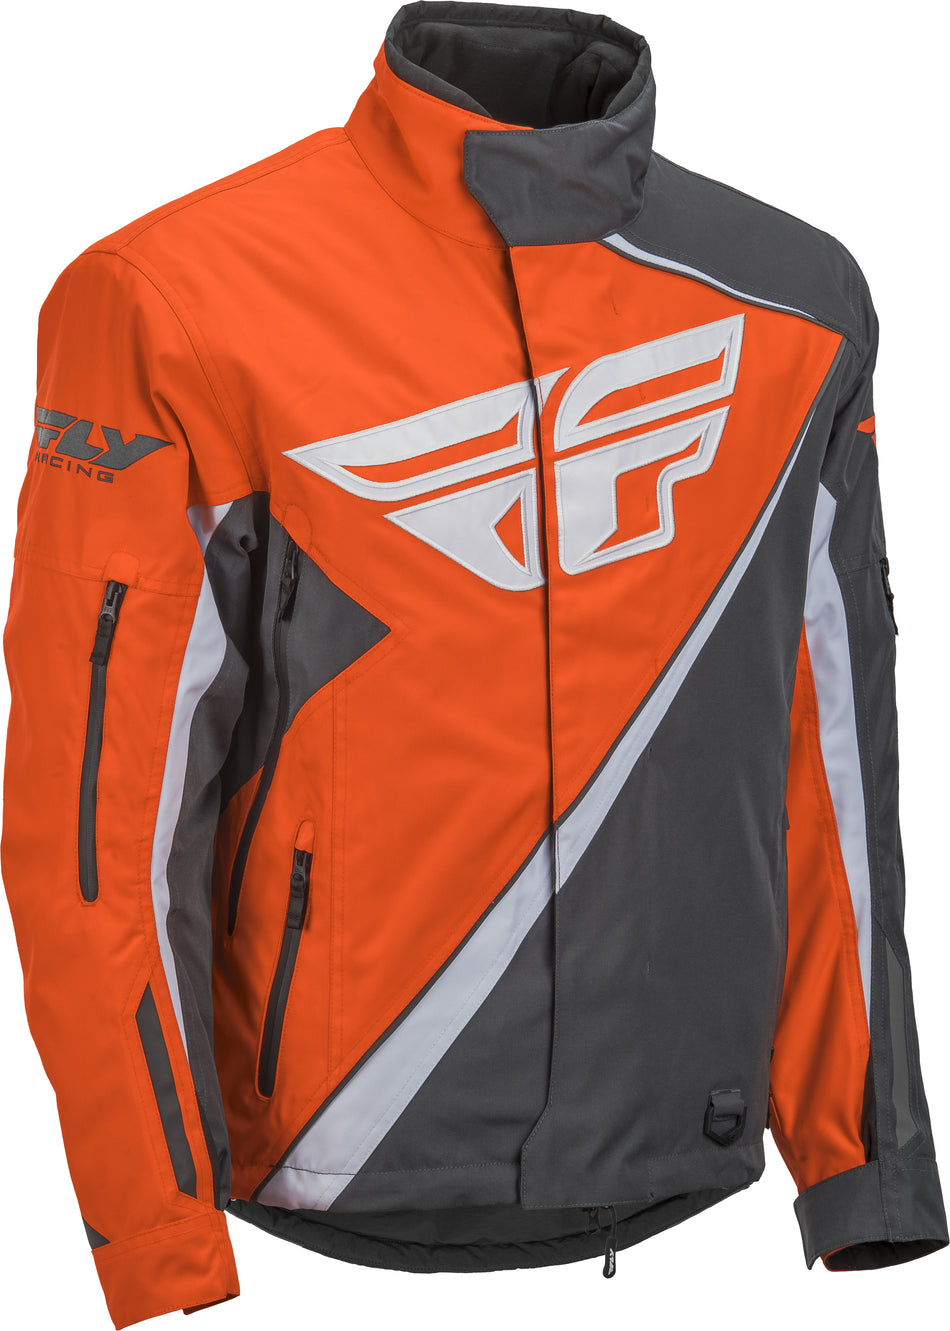 FLY RACING Fly Snx Pro Jacket Orange/Grey Yxs 470-4088YXS